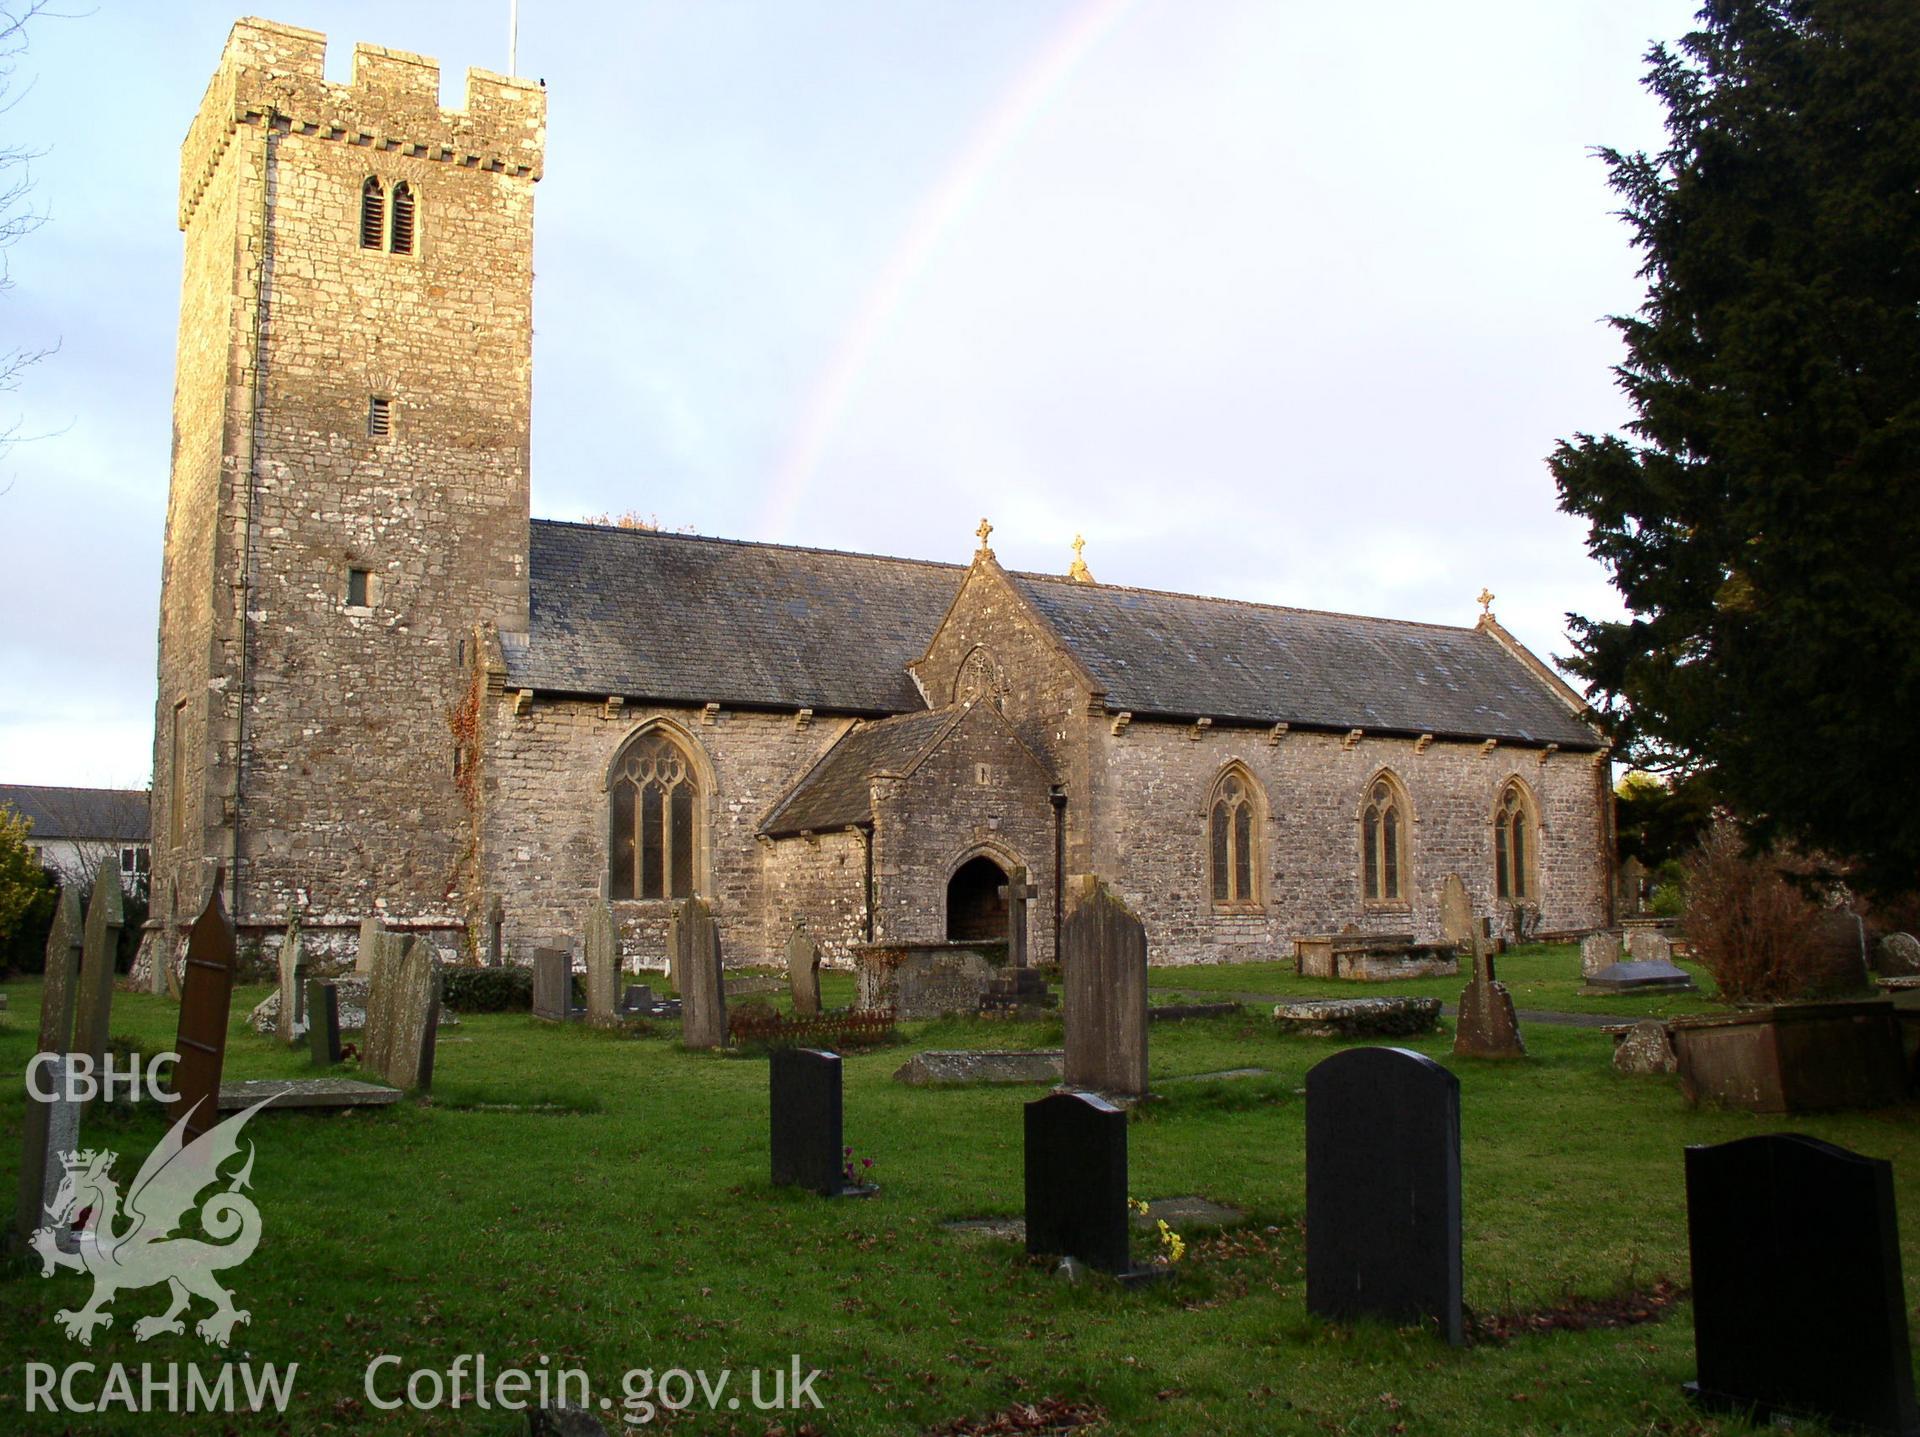 Colour digital photograph showing a front elevation view of St Nicholas' Church, St Nicholas; Glamorgan.